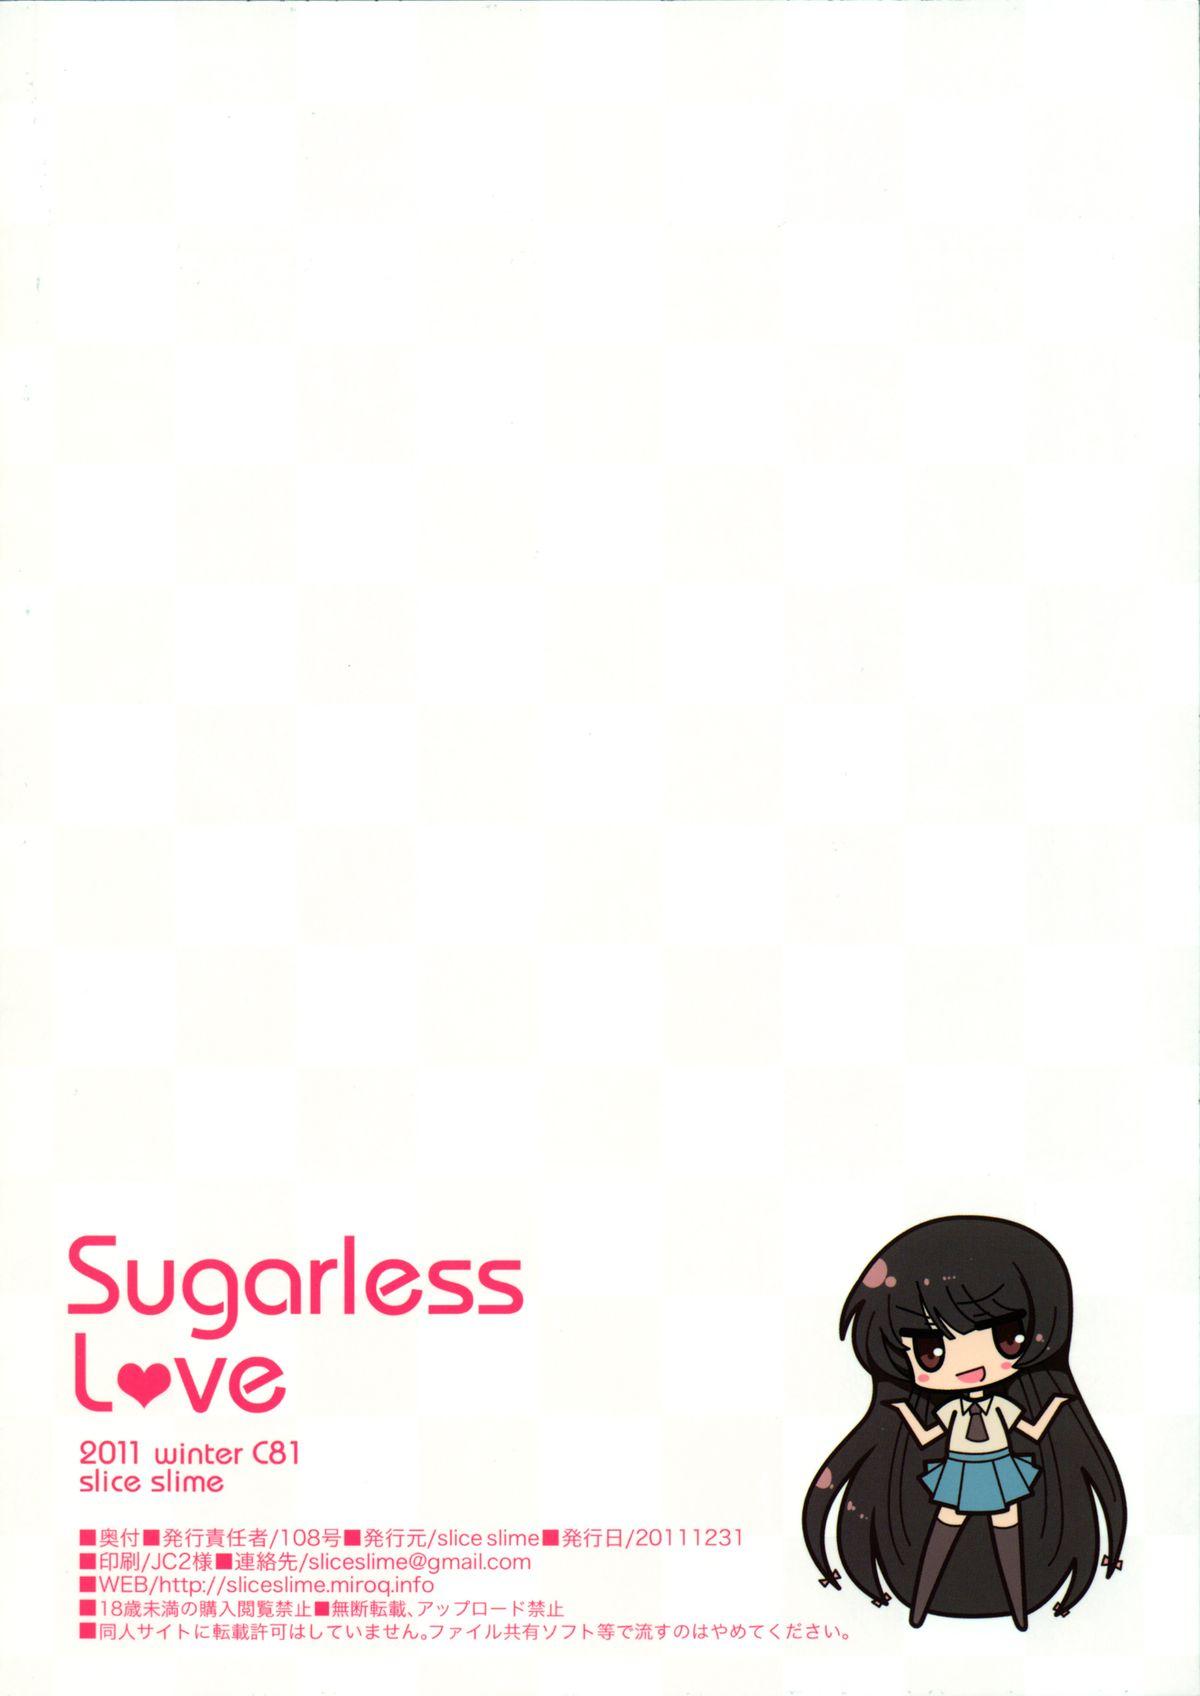 Sugarless love 12